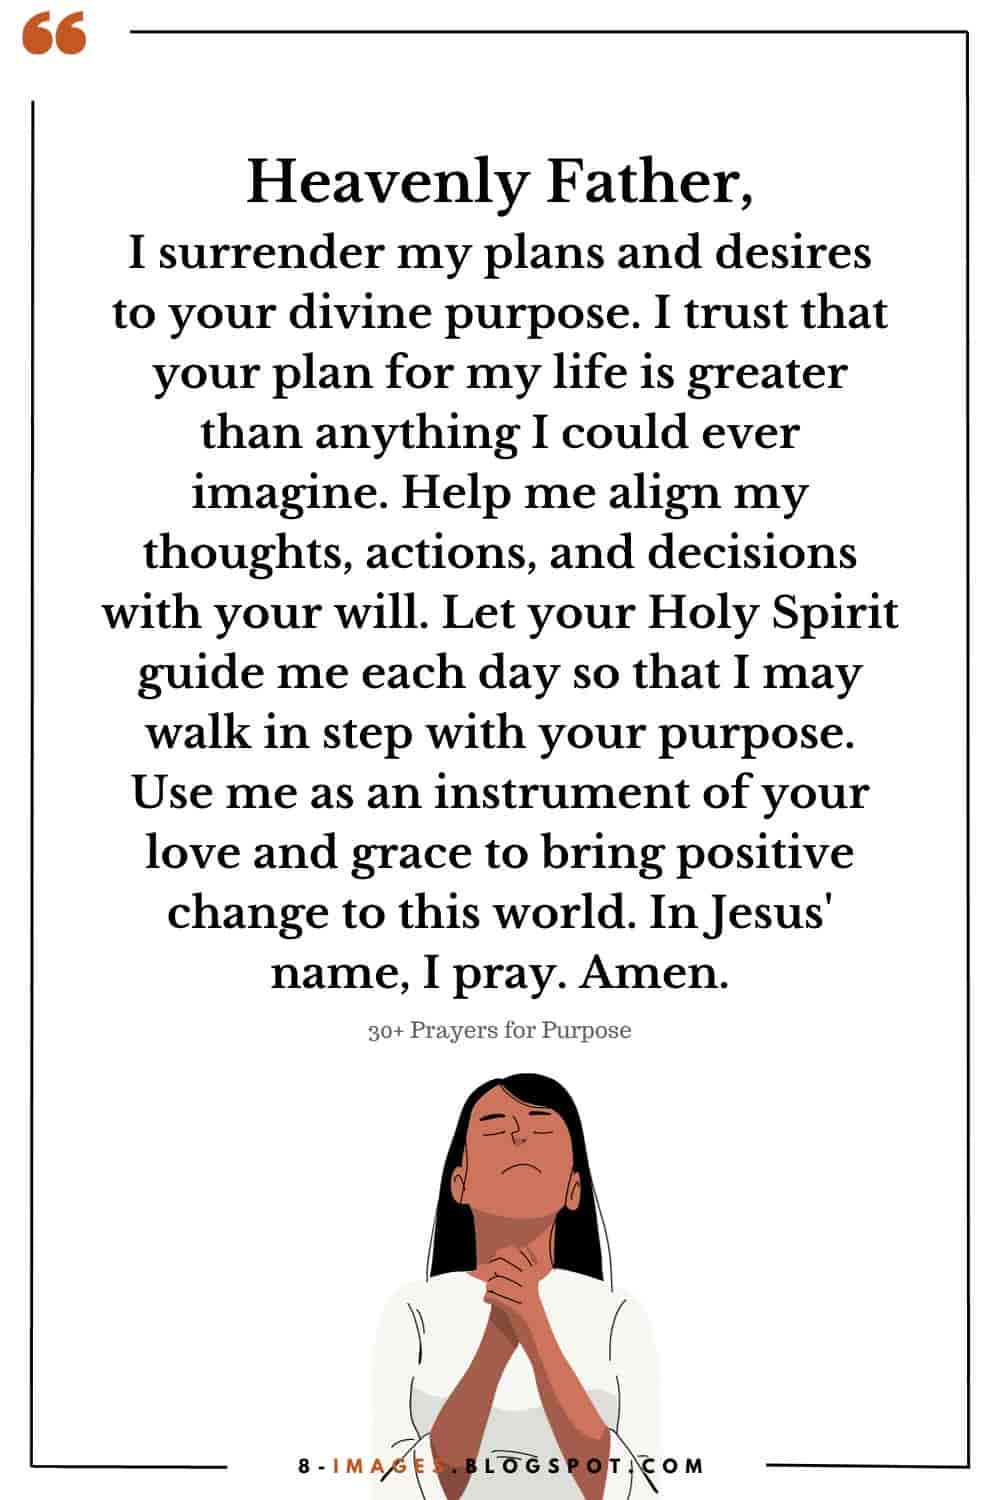 Prayer for Purpose